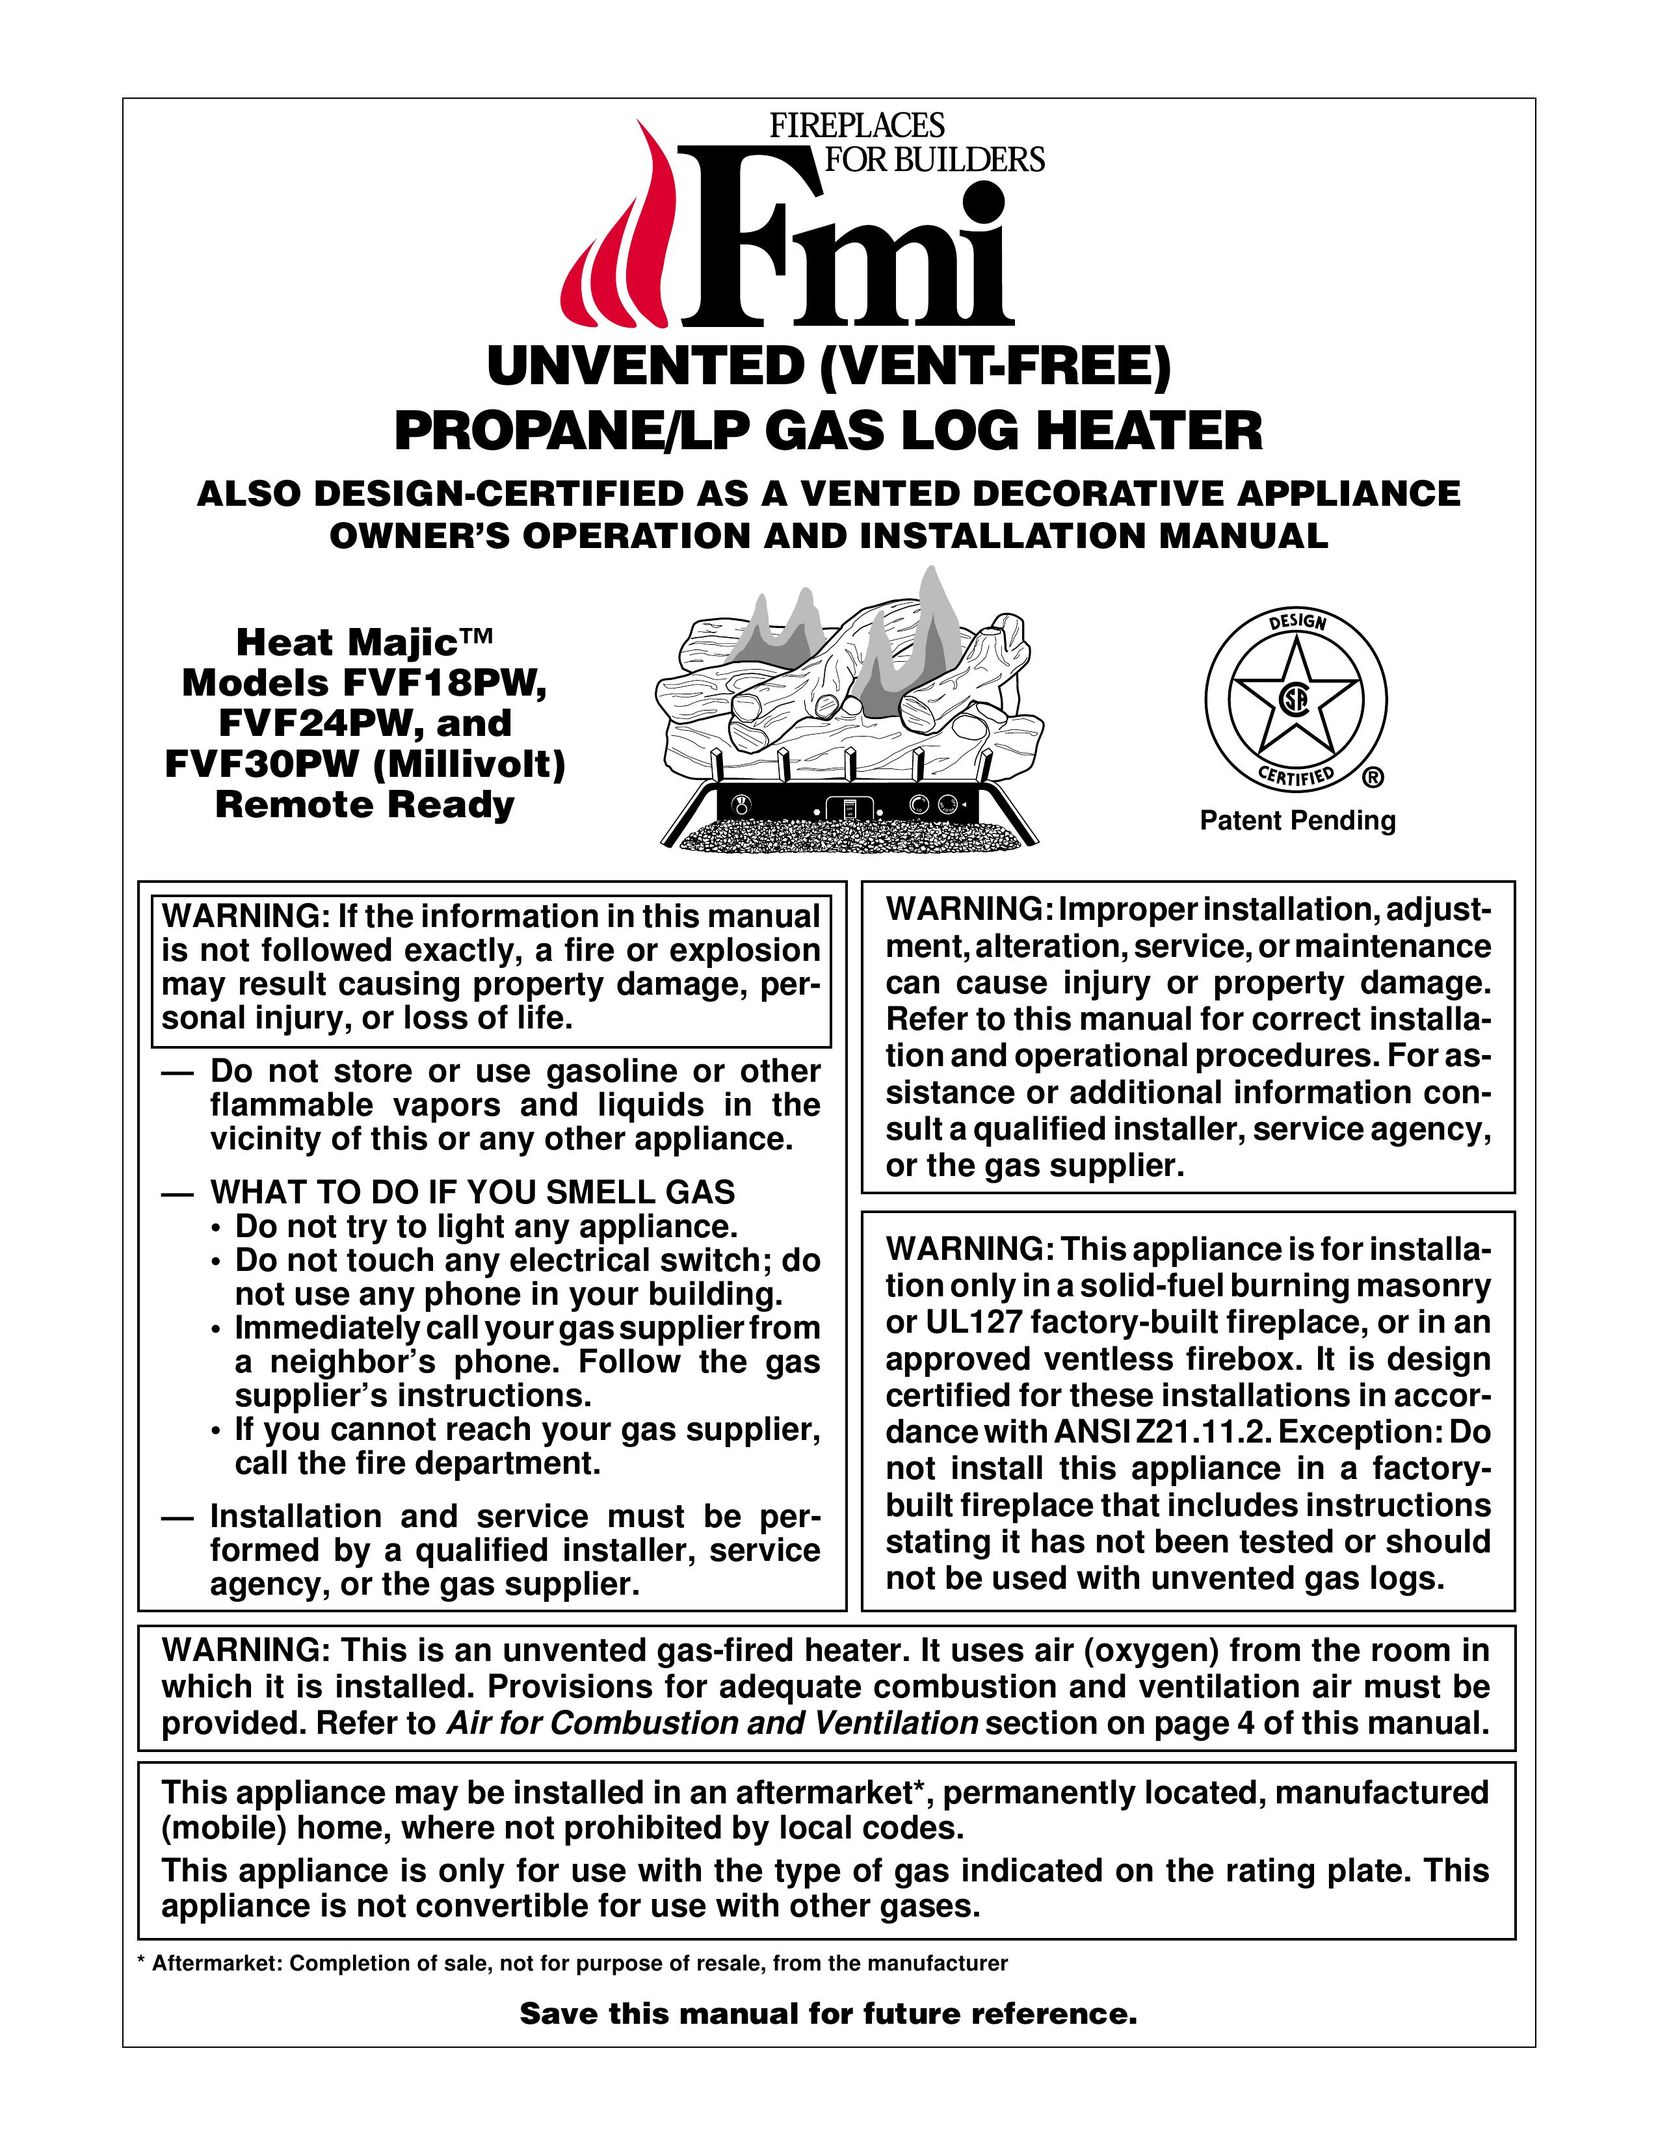 FMI FVF18PW Gas Heater User Manual